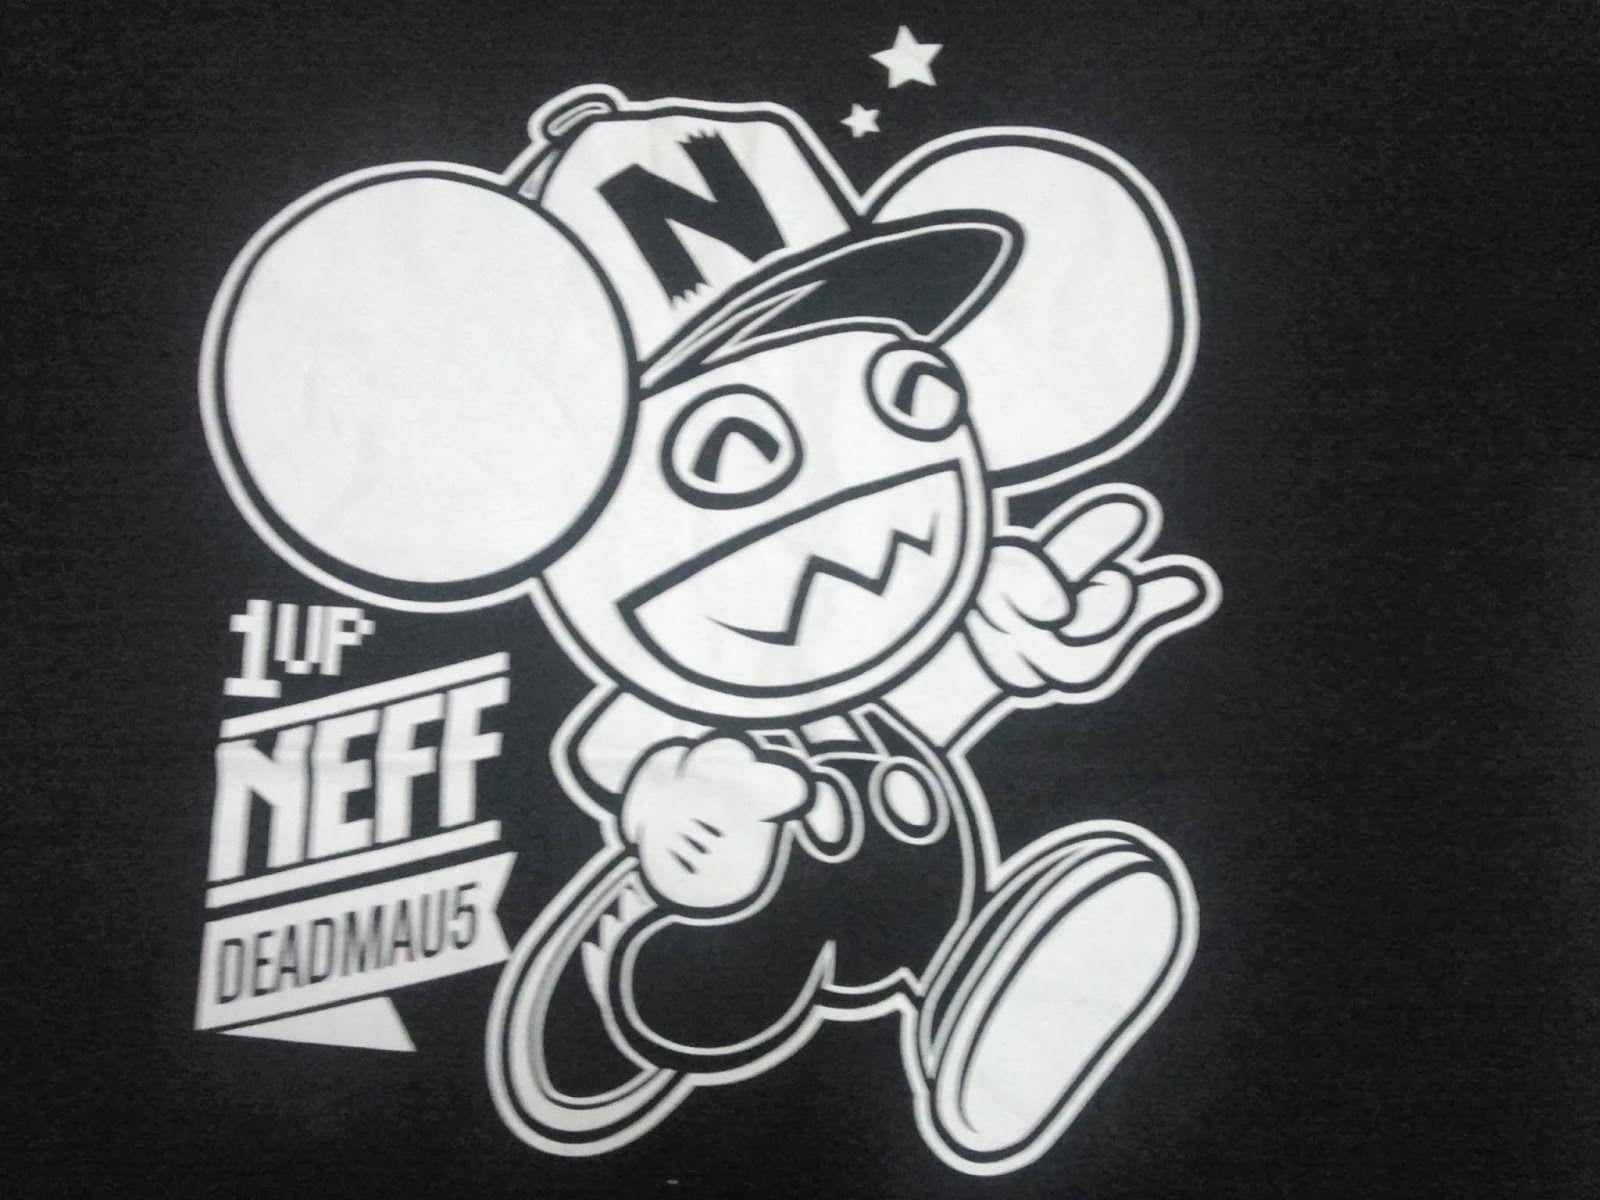 Neff Mau5 Logo - Jerau's Territory X Wishlists: (WL 1855) Deadmau5 1UP By NEFF T Shirt